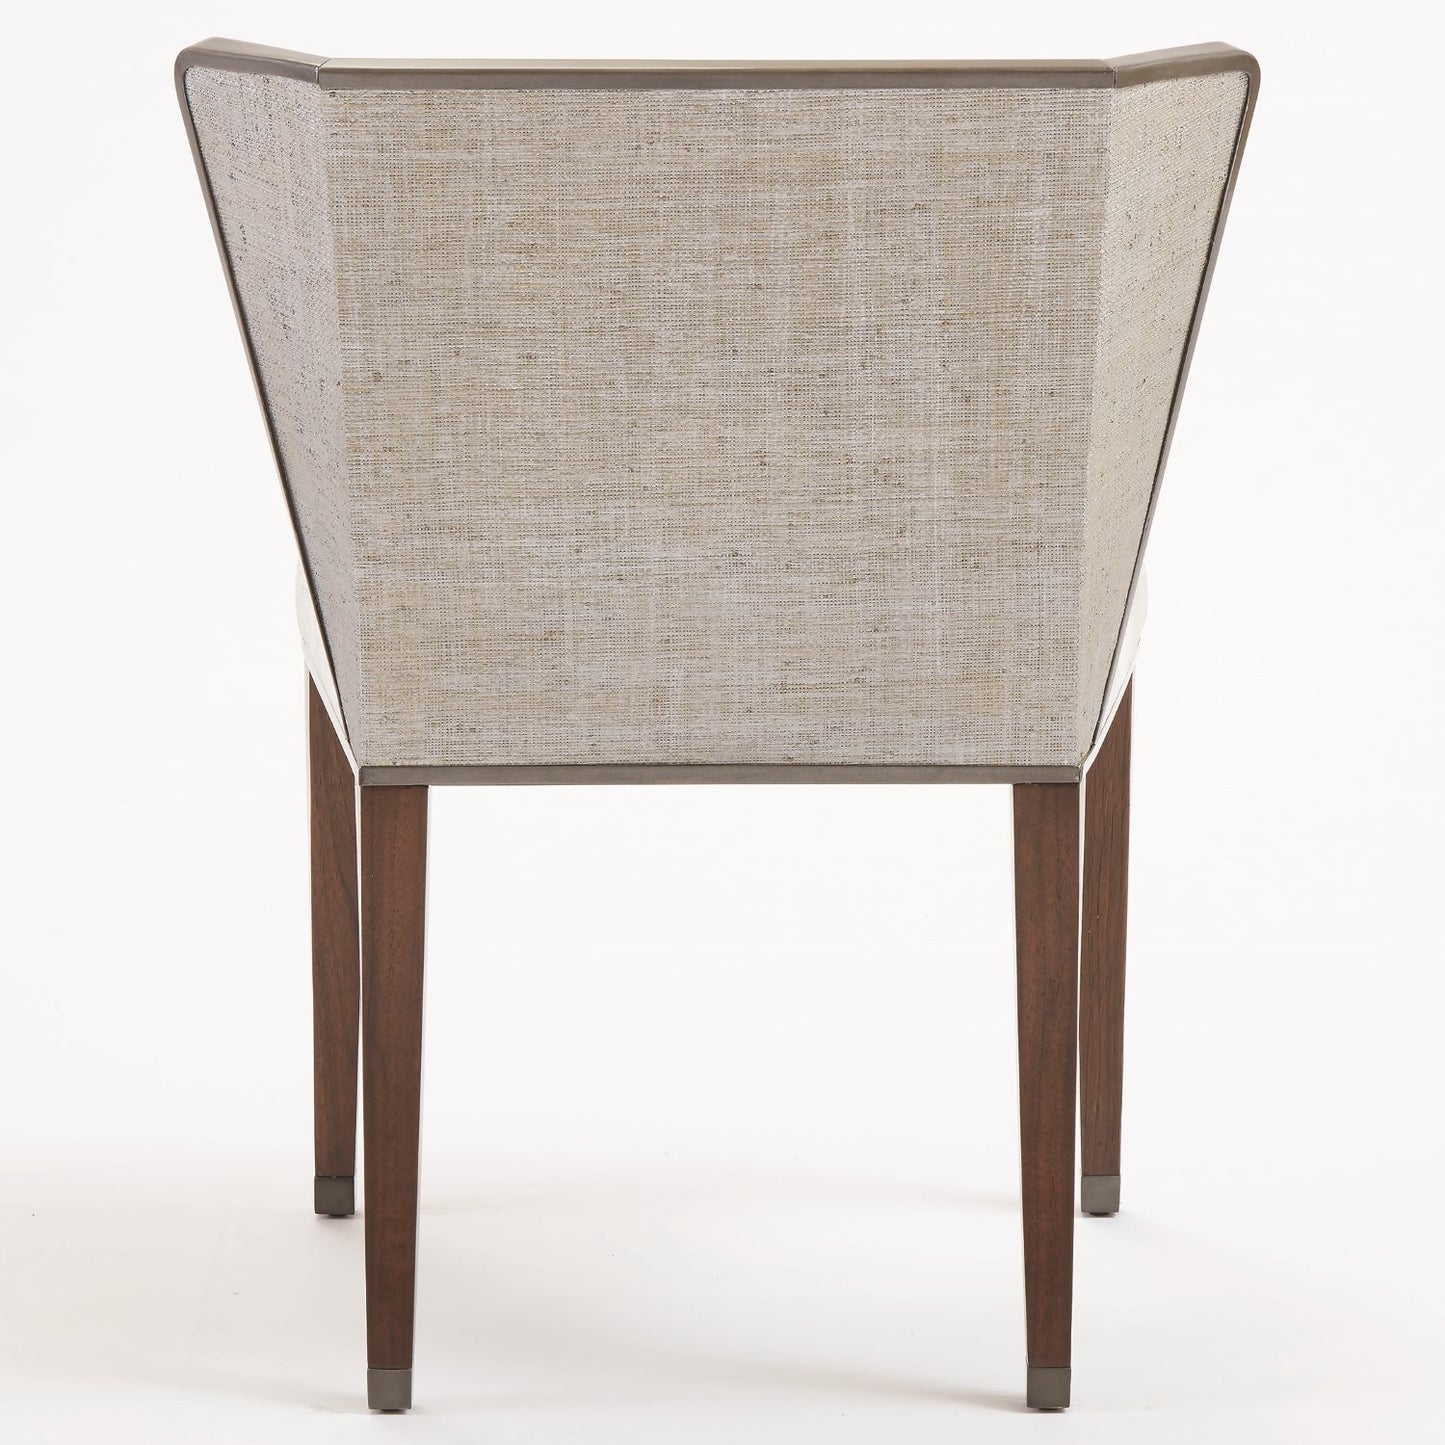 Argento Chair - Grats Decor Interior Design & Build Inc.